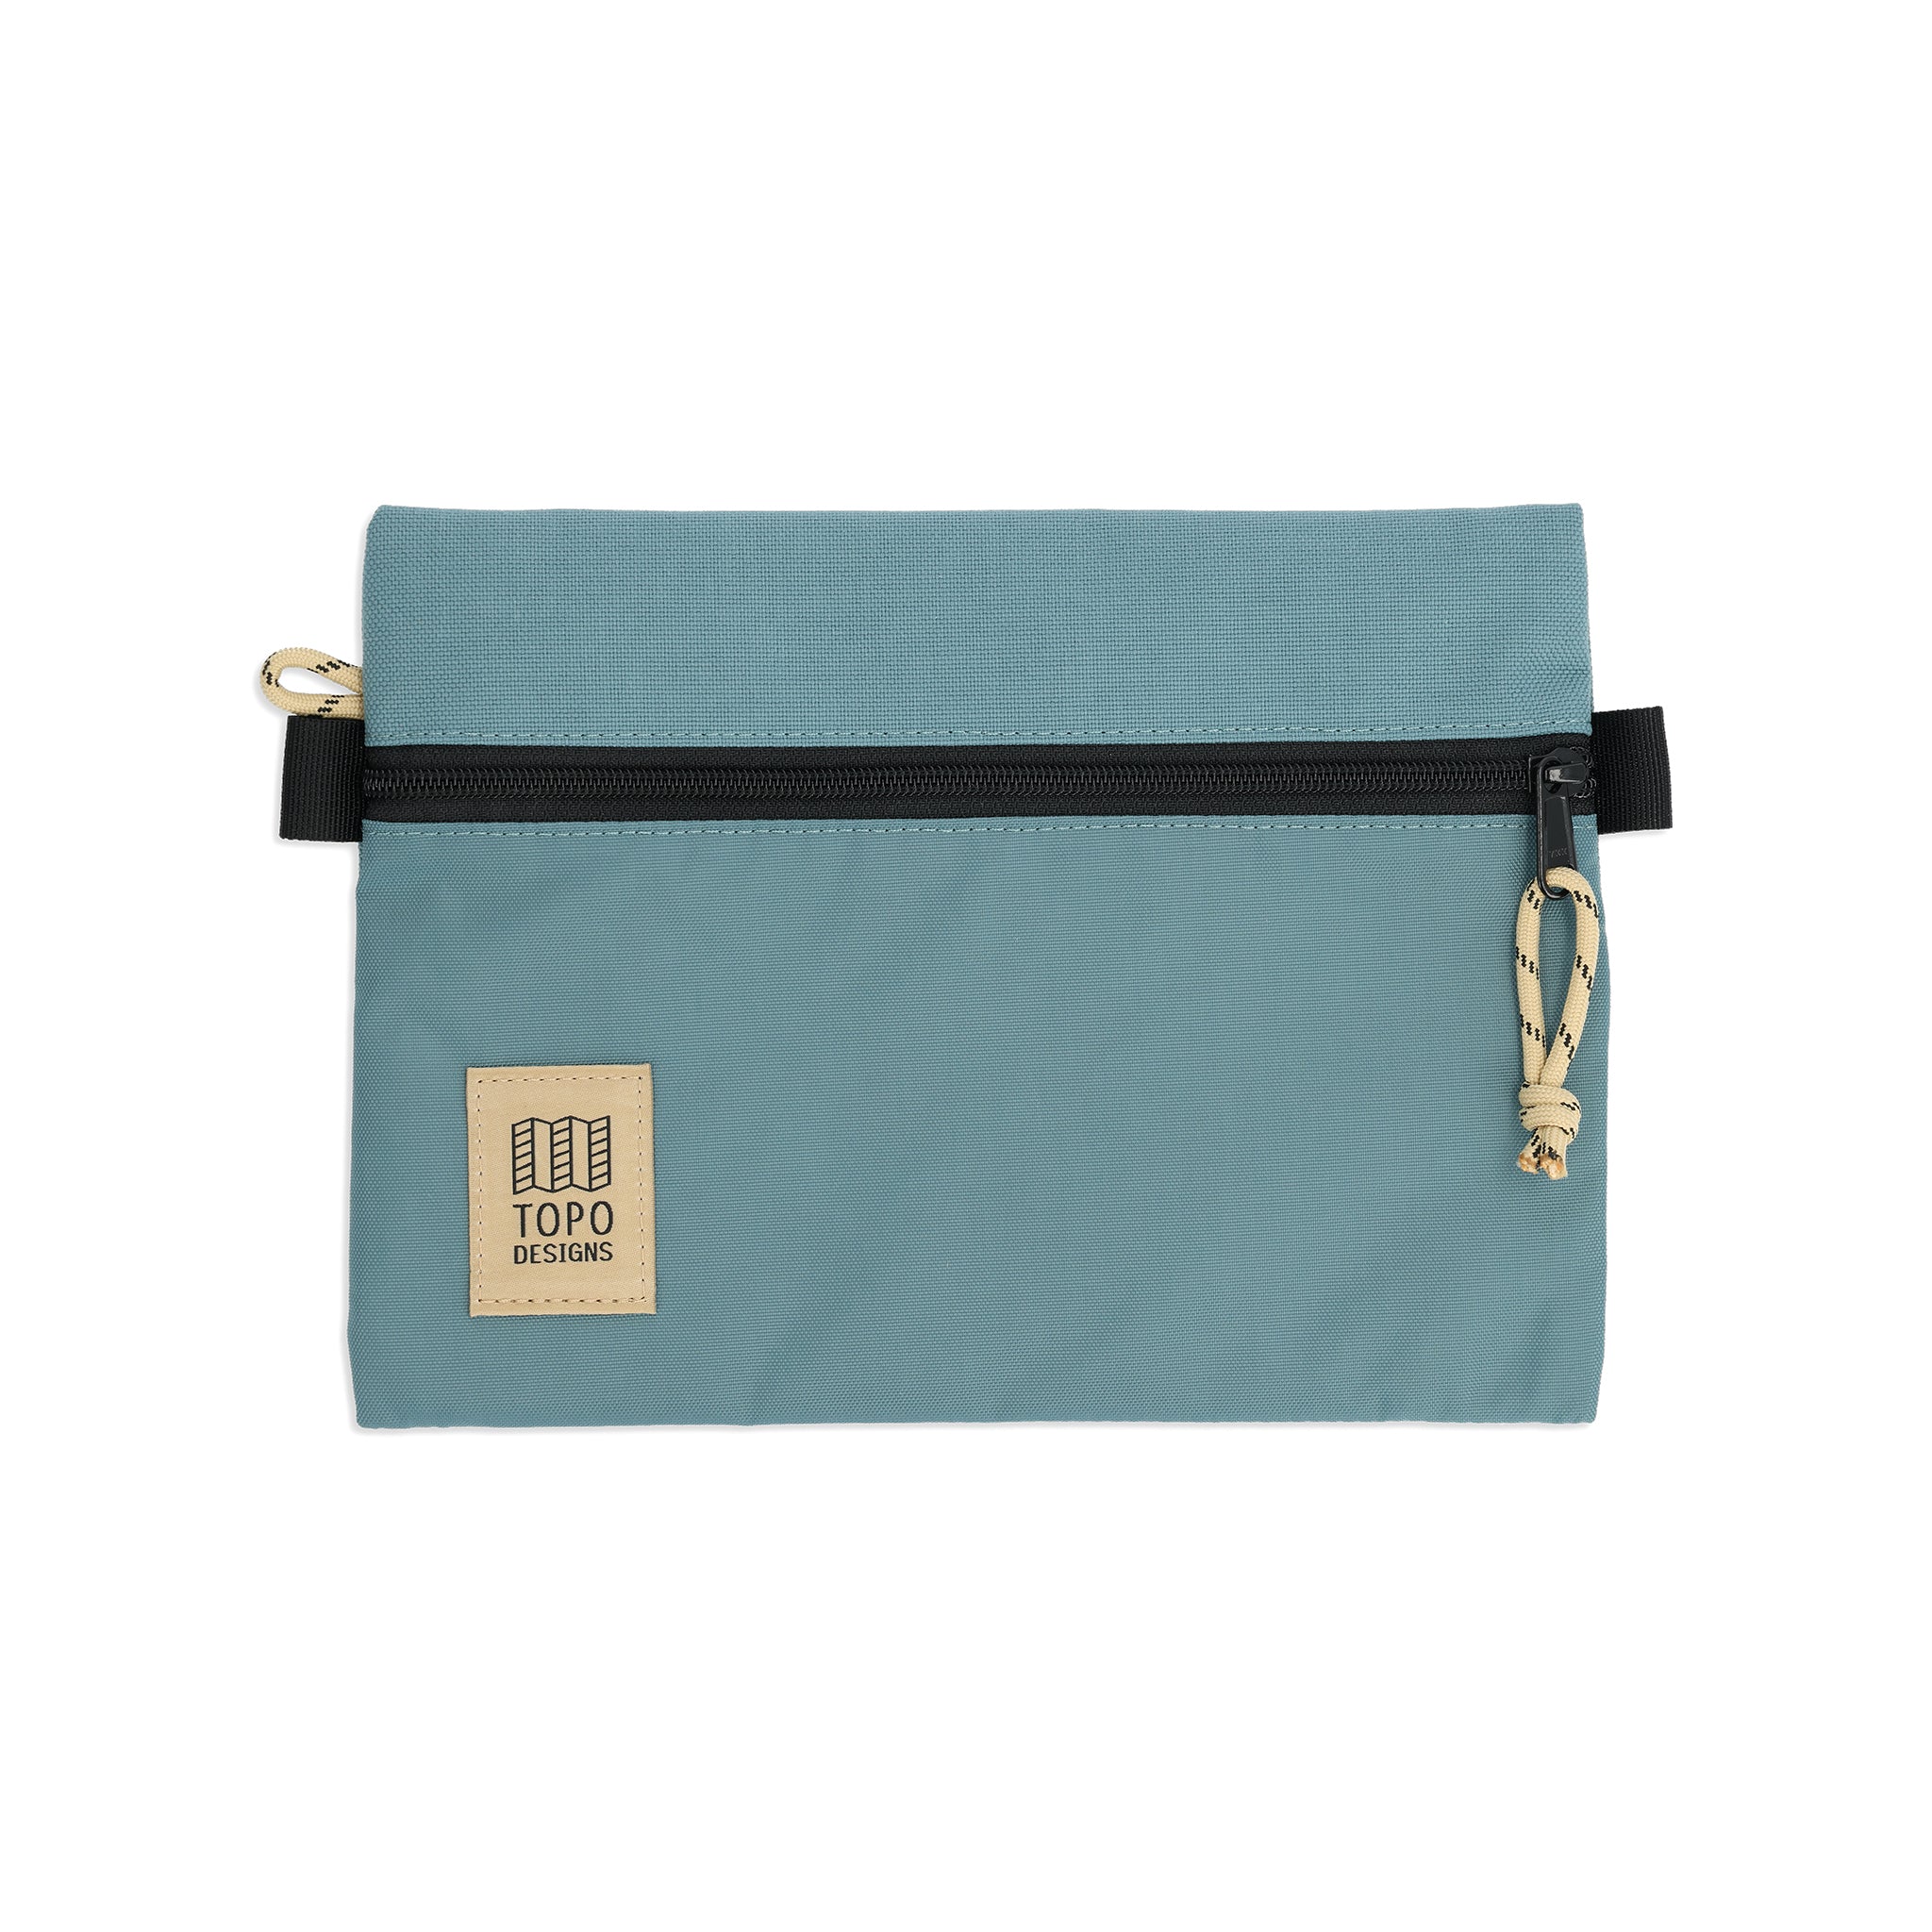 Front View of Topo Designs Accessory Bags in "Medium" "Sea Pine"